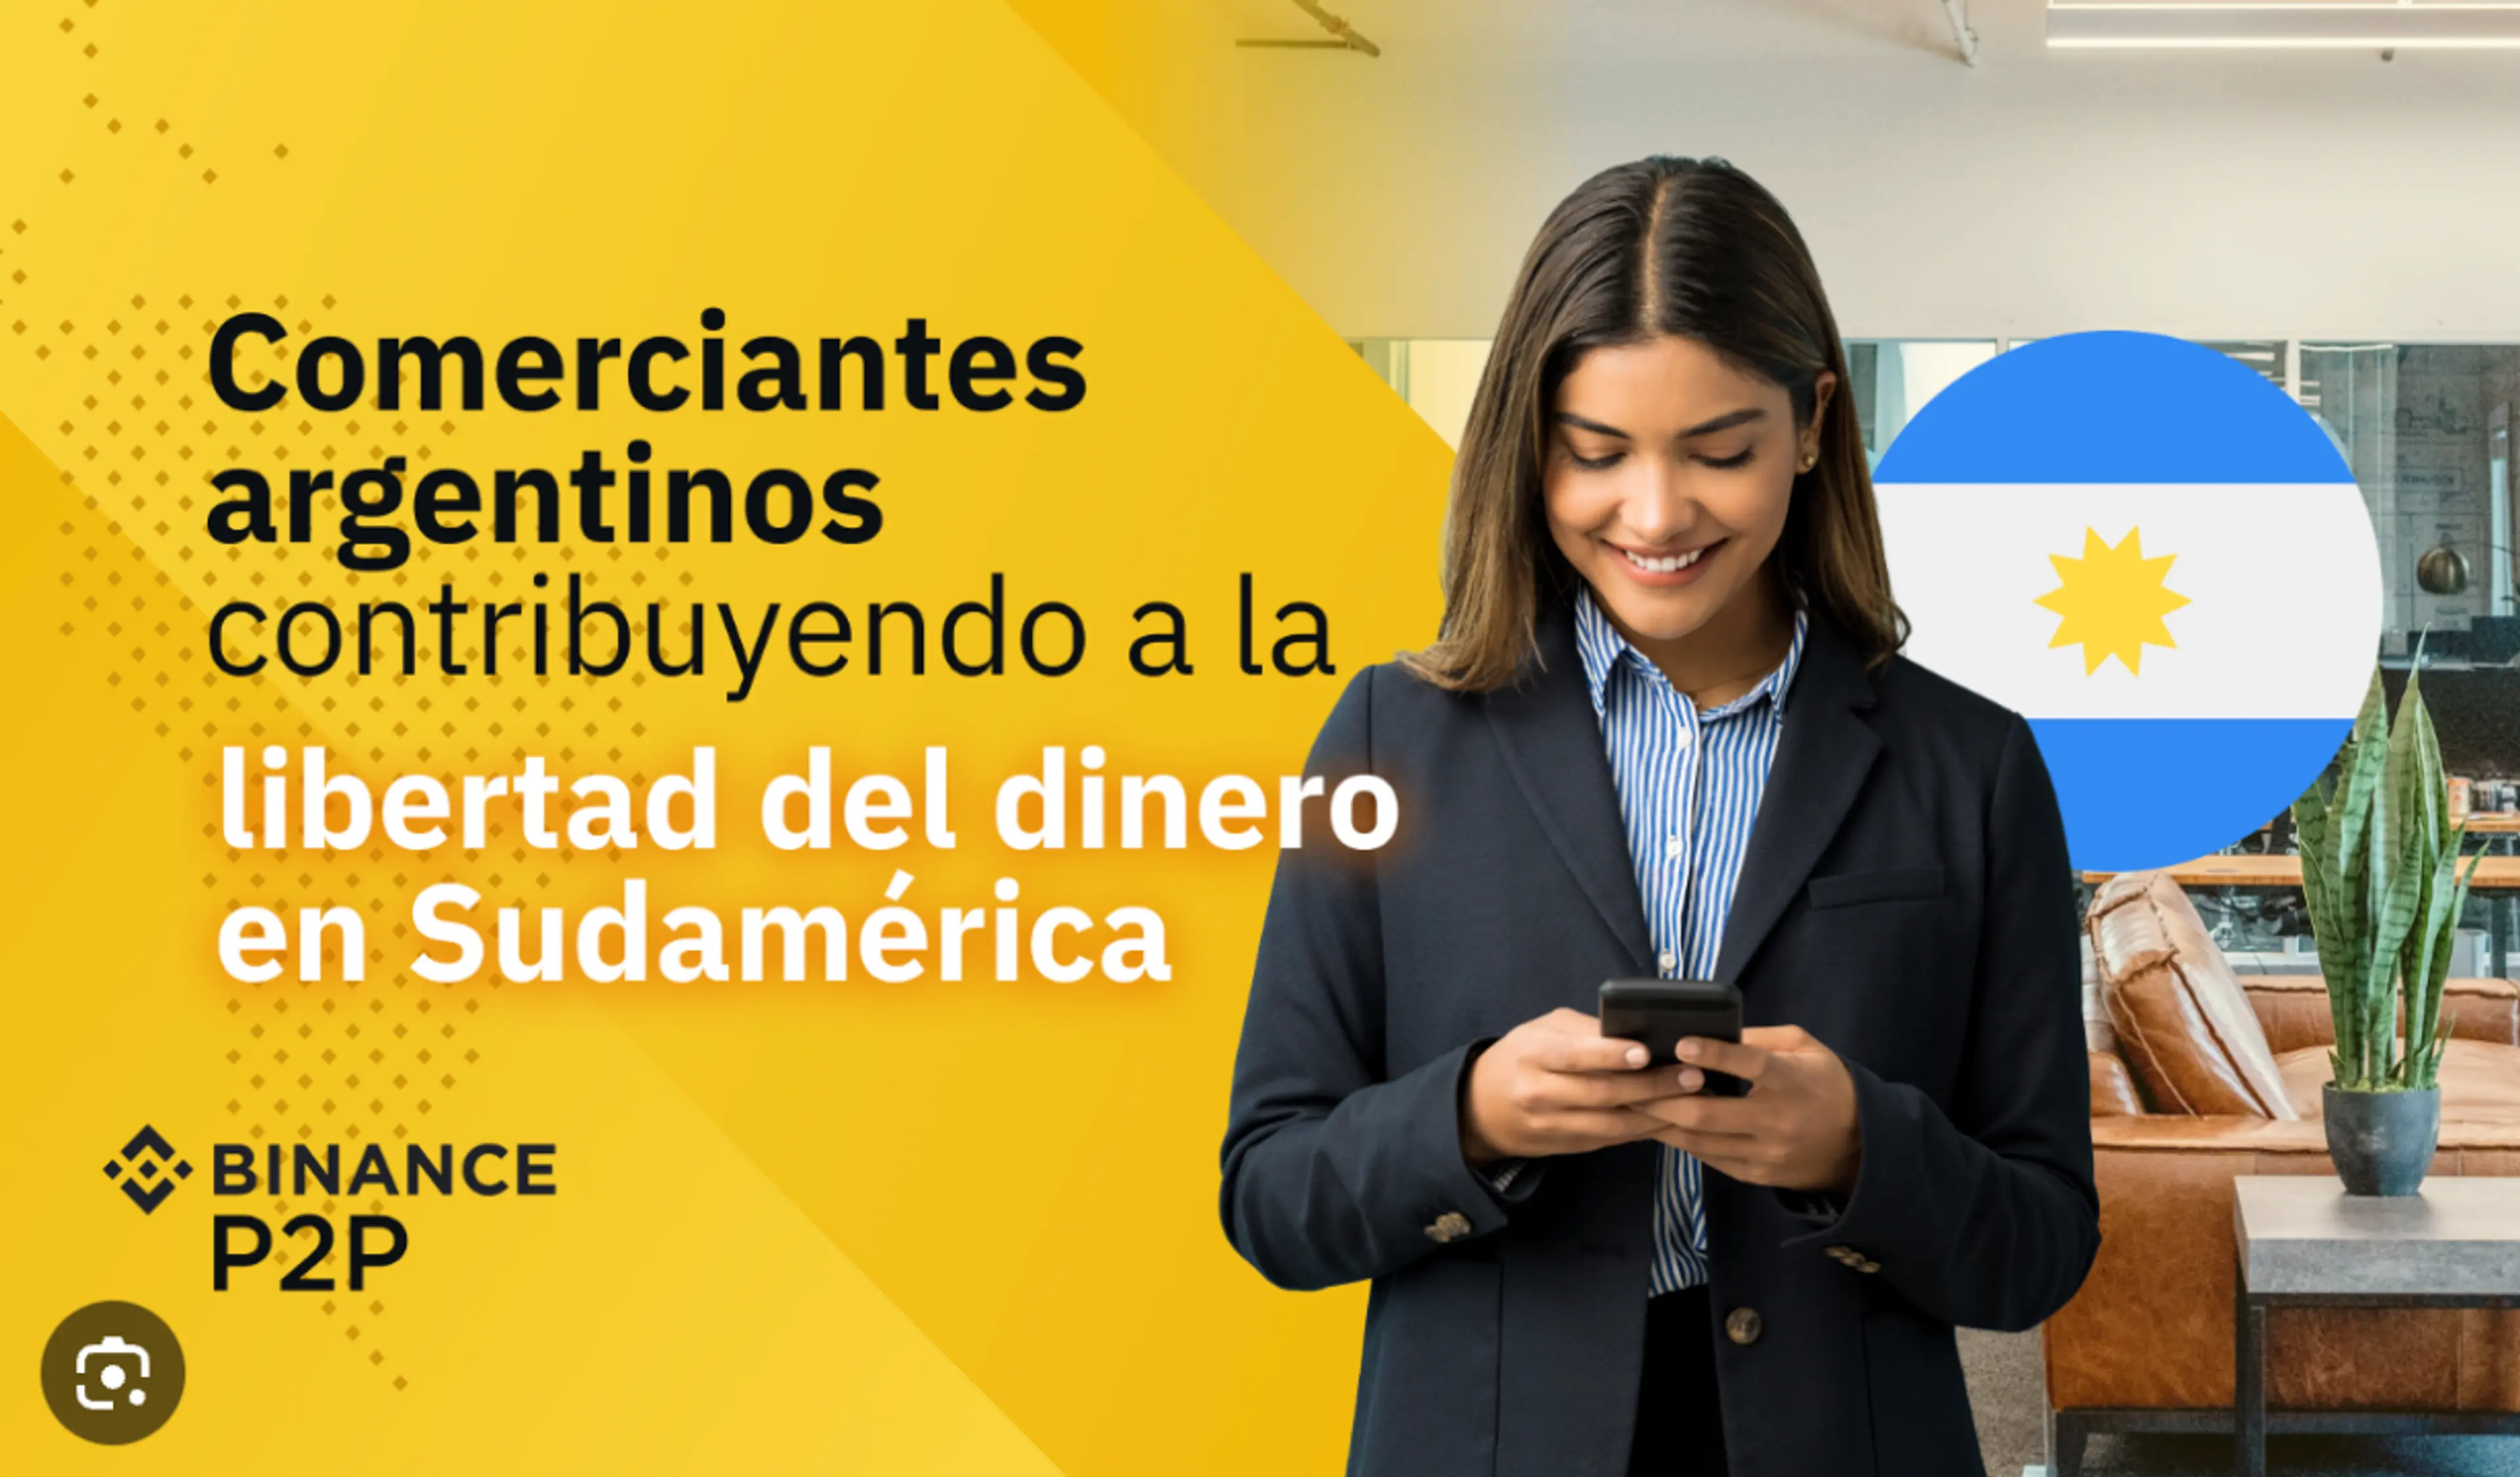 binance 广告 —— 阿根廷商人通过币安 P2P 为拉丁美洲的金融自由做出贡献